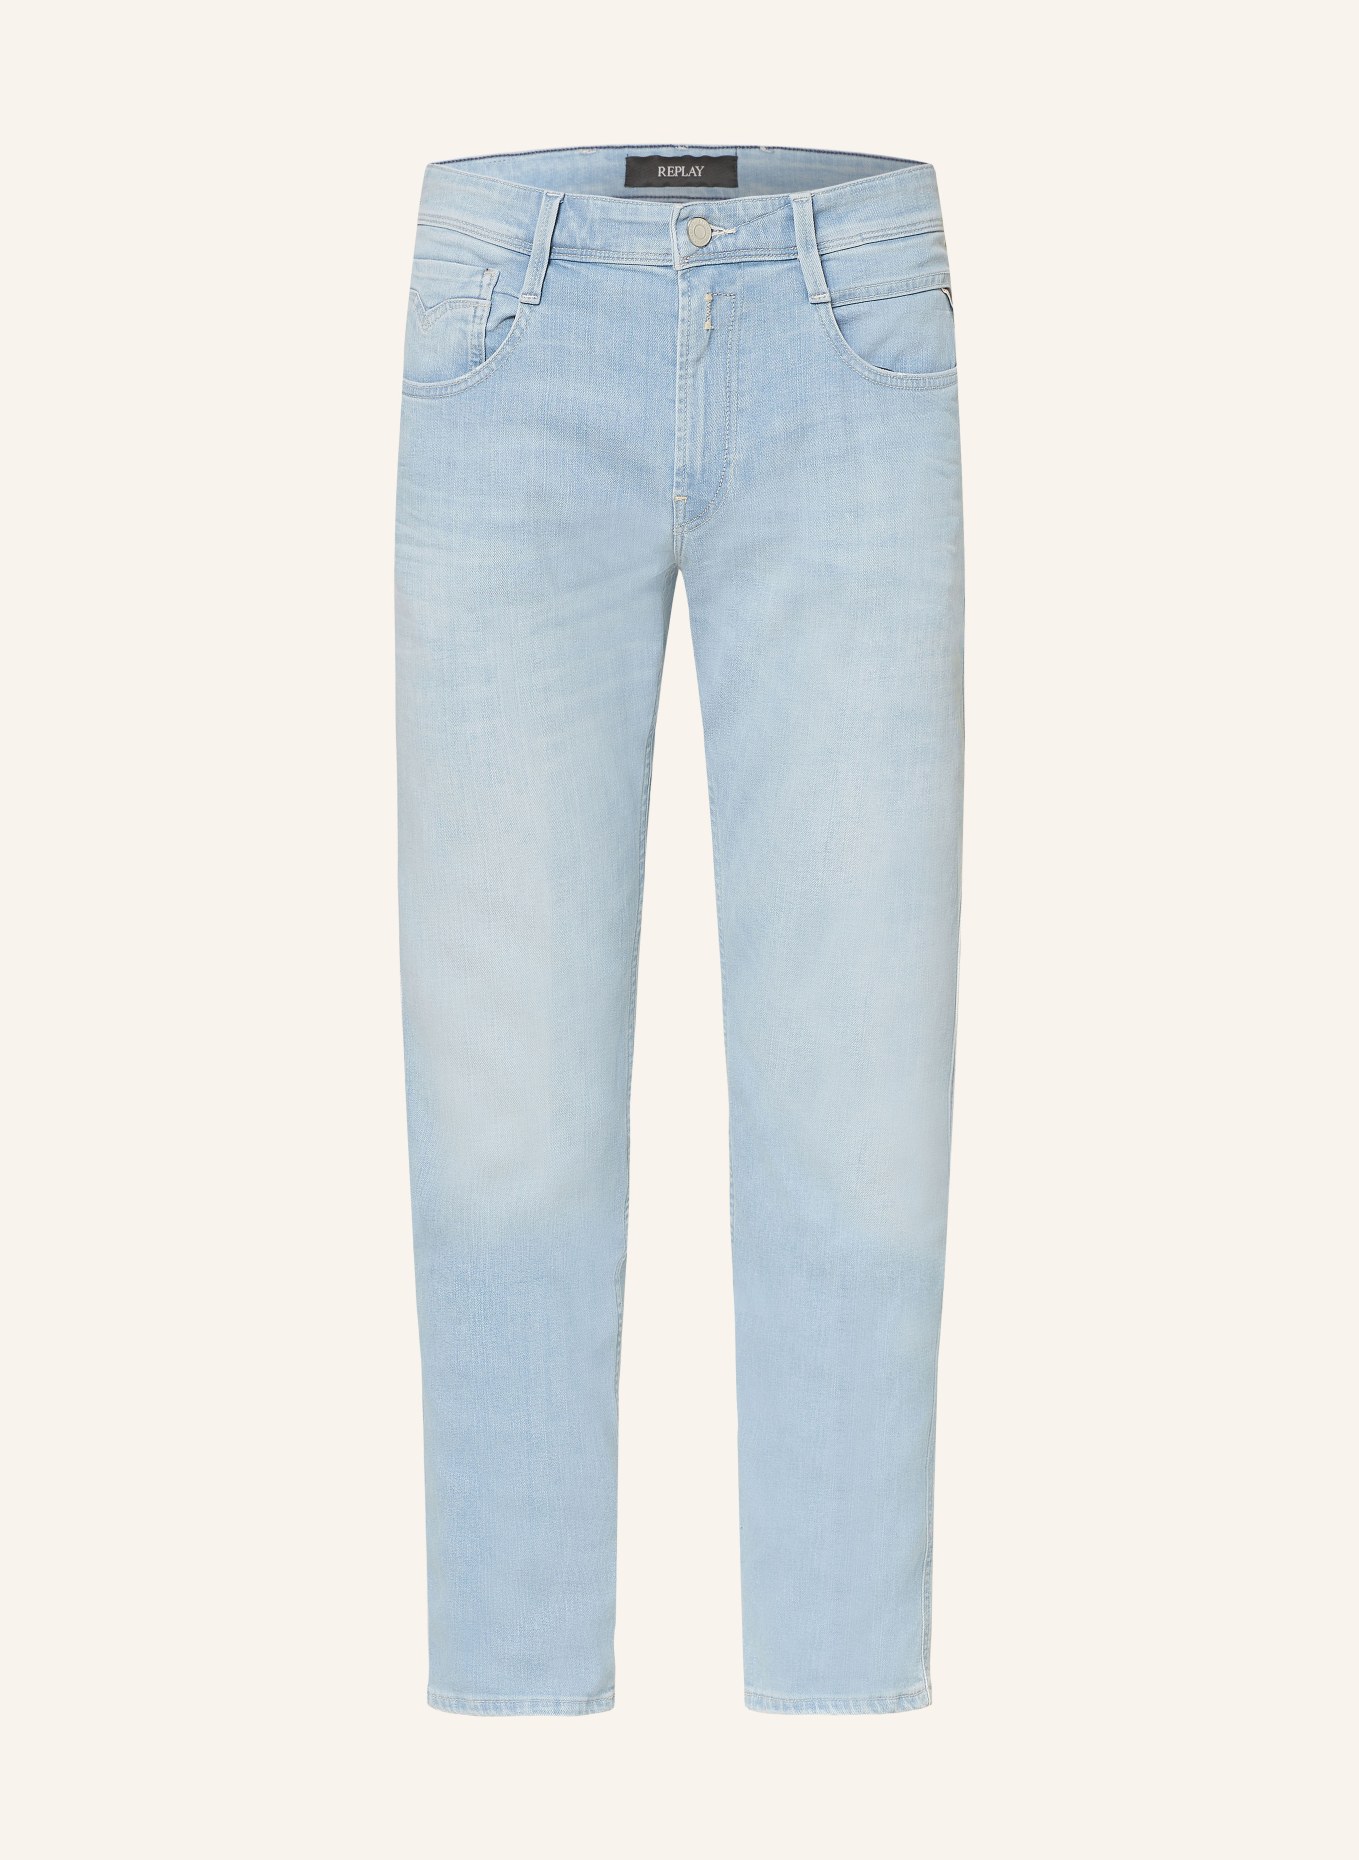 REPLAY Jeans Extra Slim Fit, Farbe: 010 LIGHT BLUE (Bild 1)